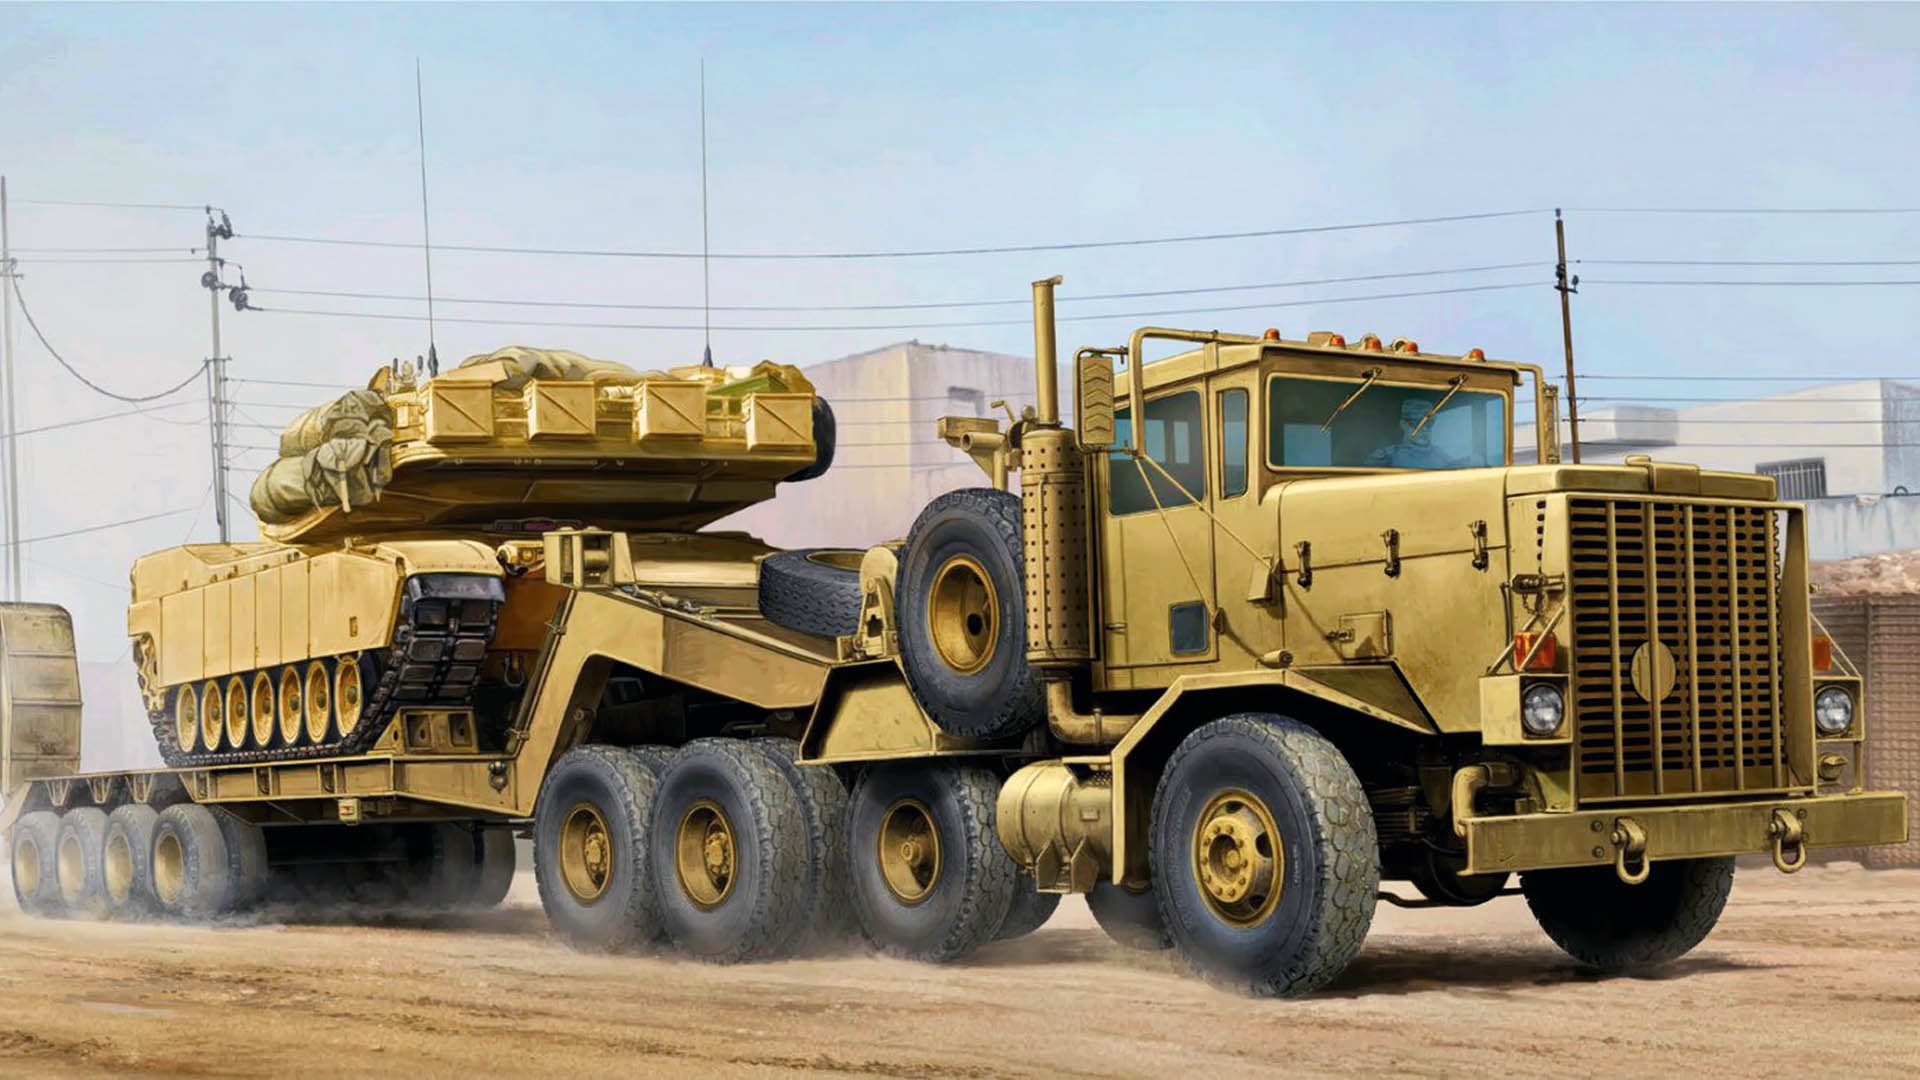 General 1920x1080 military vehicle artwork truck tank military vehicle M1 Abrams American tanks